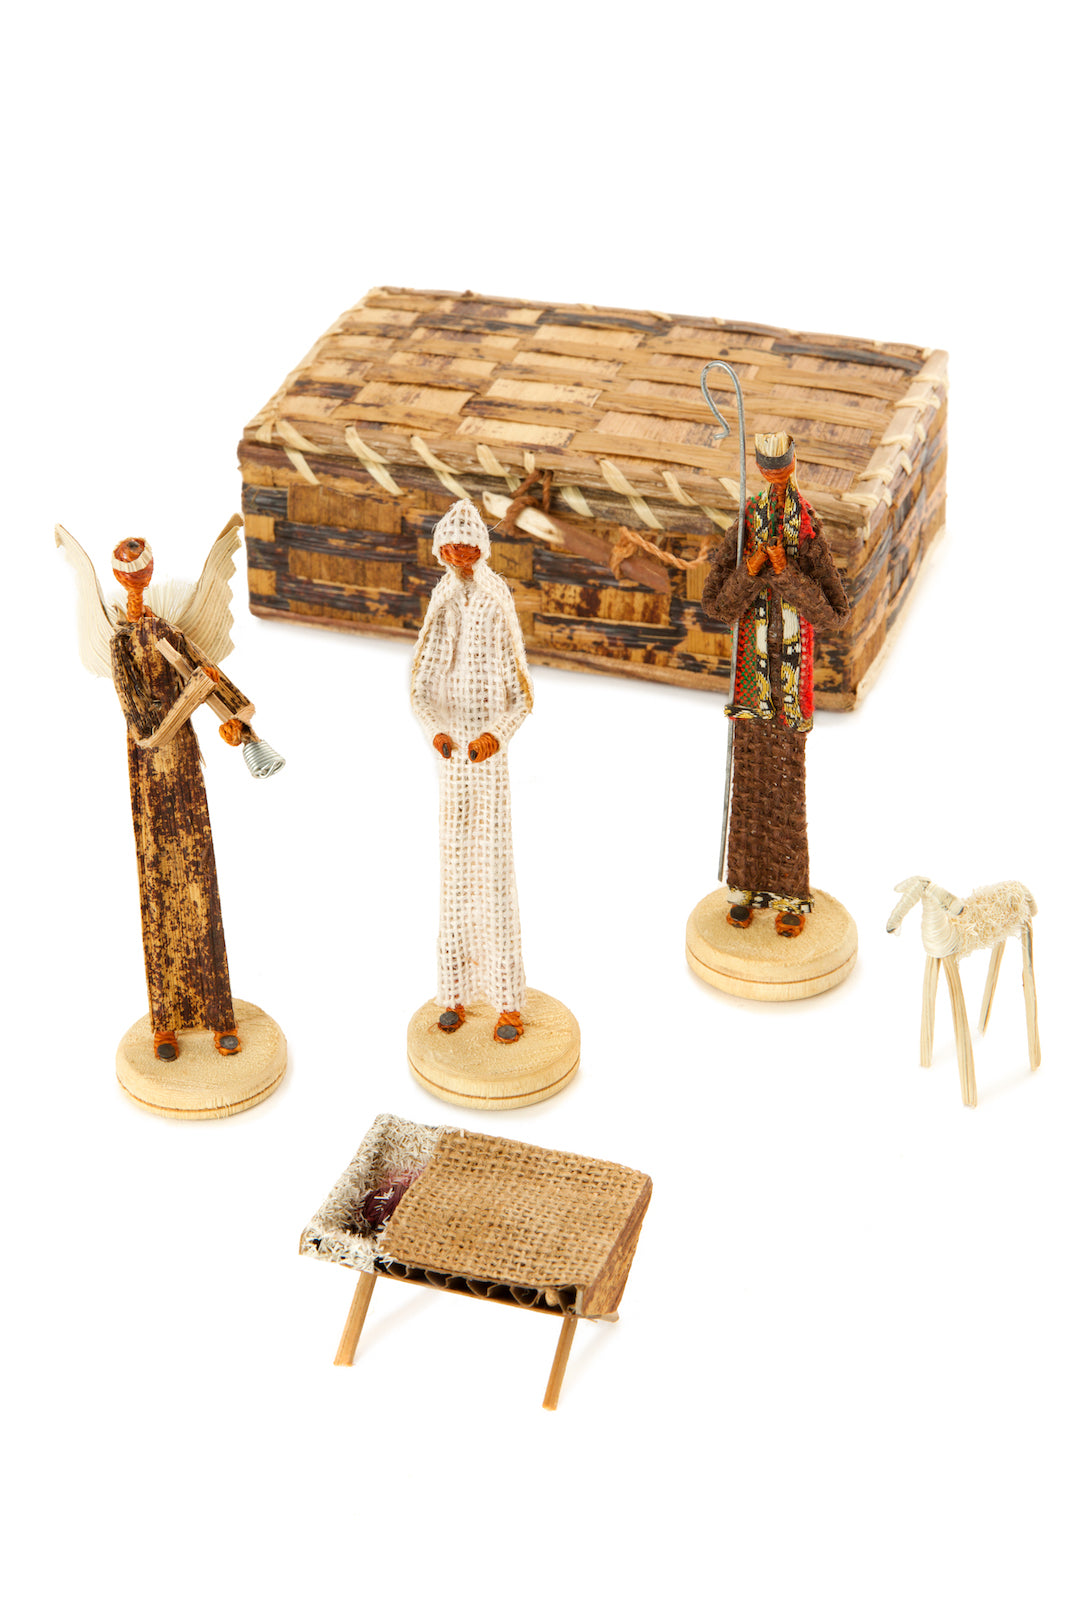 5-Piece Nativity Scene with Banana Fiber Box